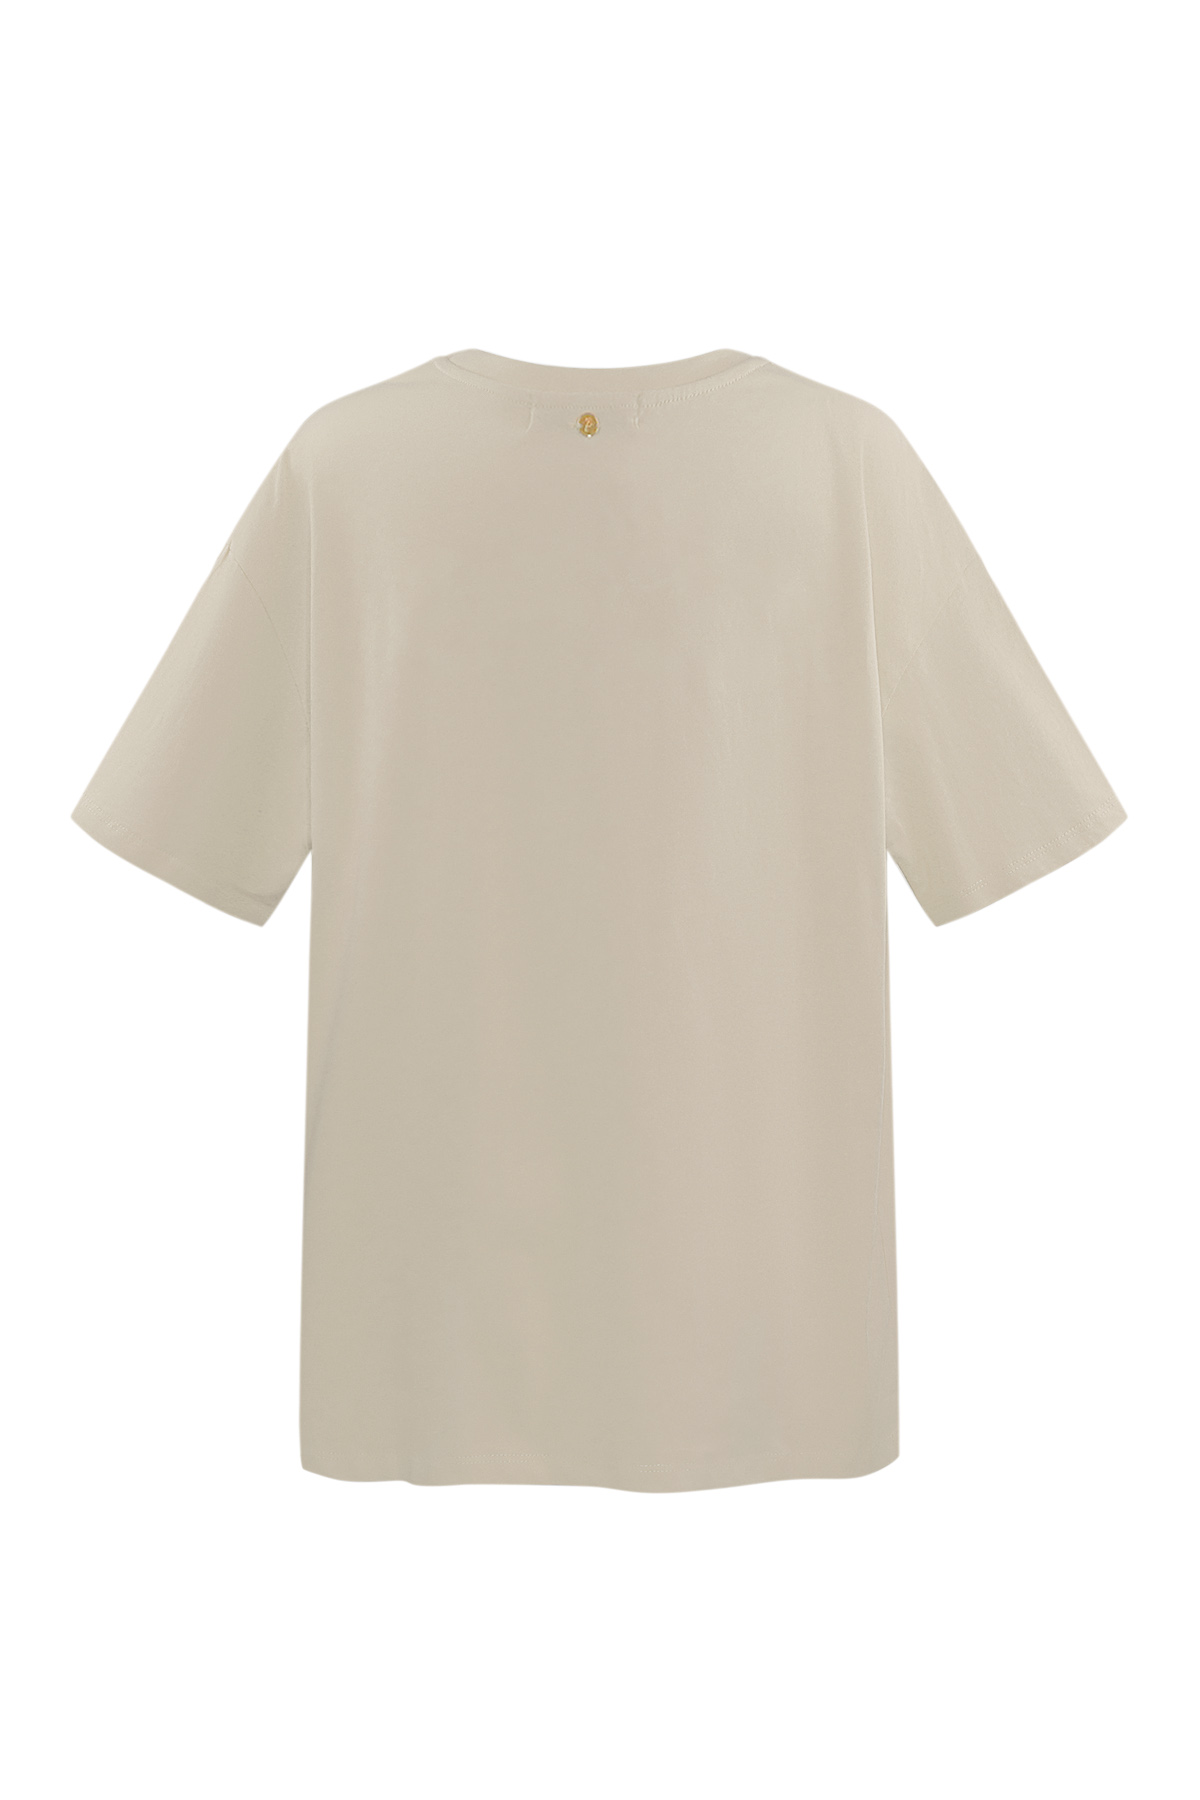 T-shirt ma perle - beige h5 Afbeelding7